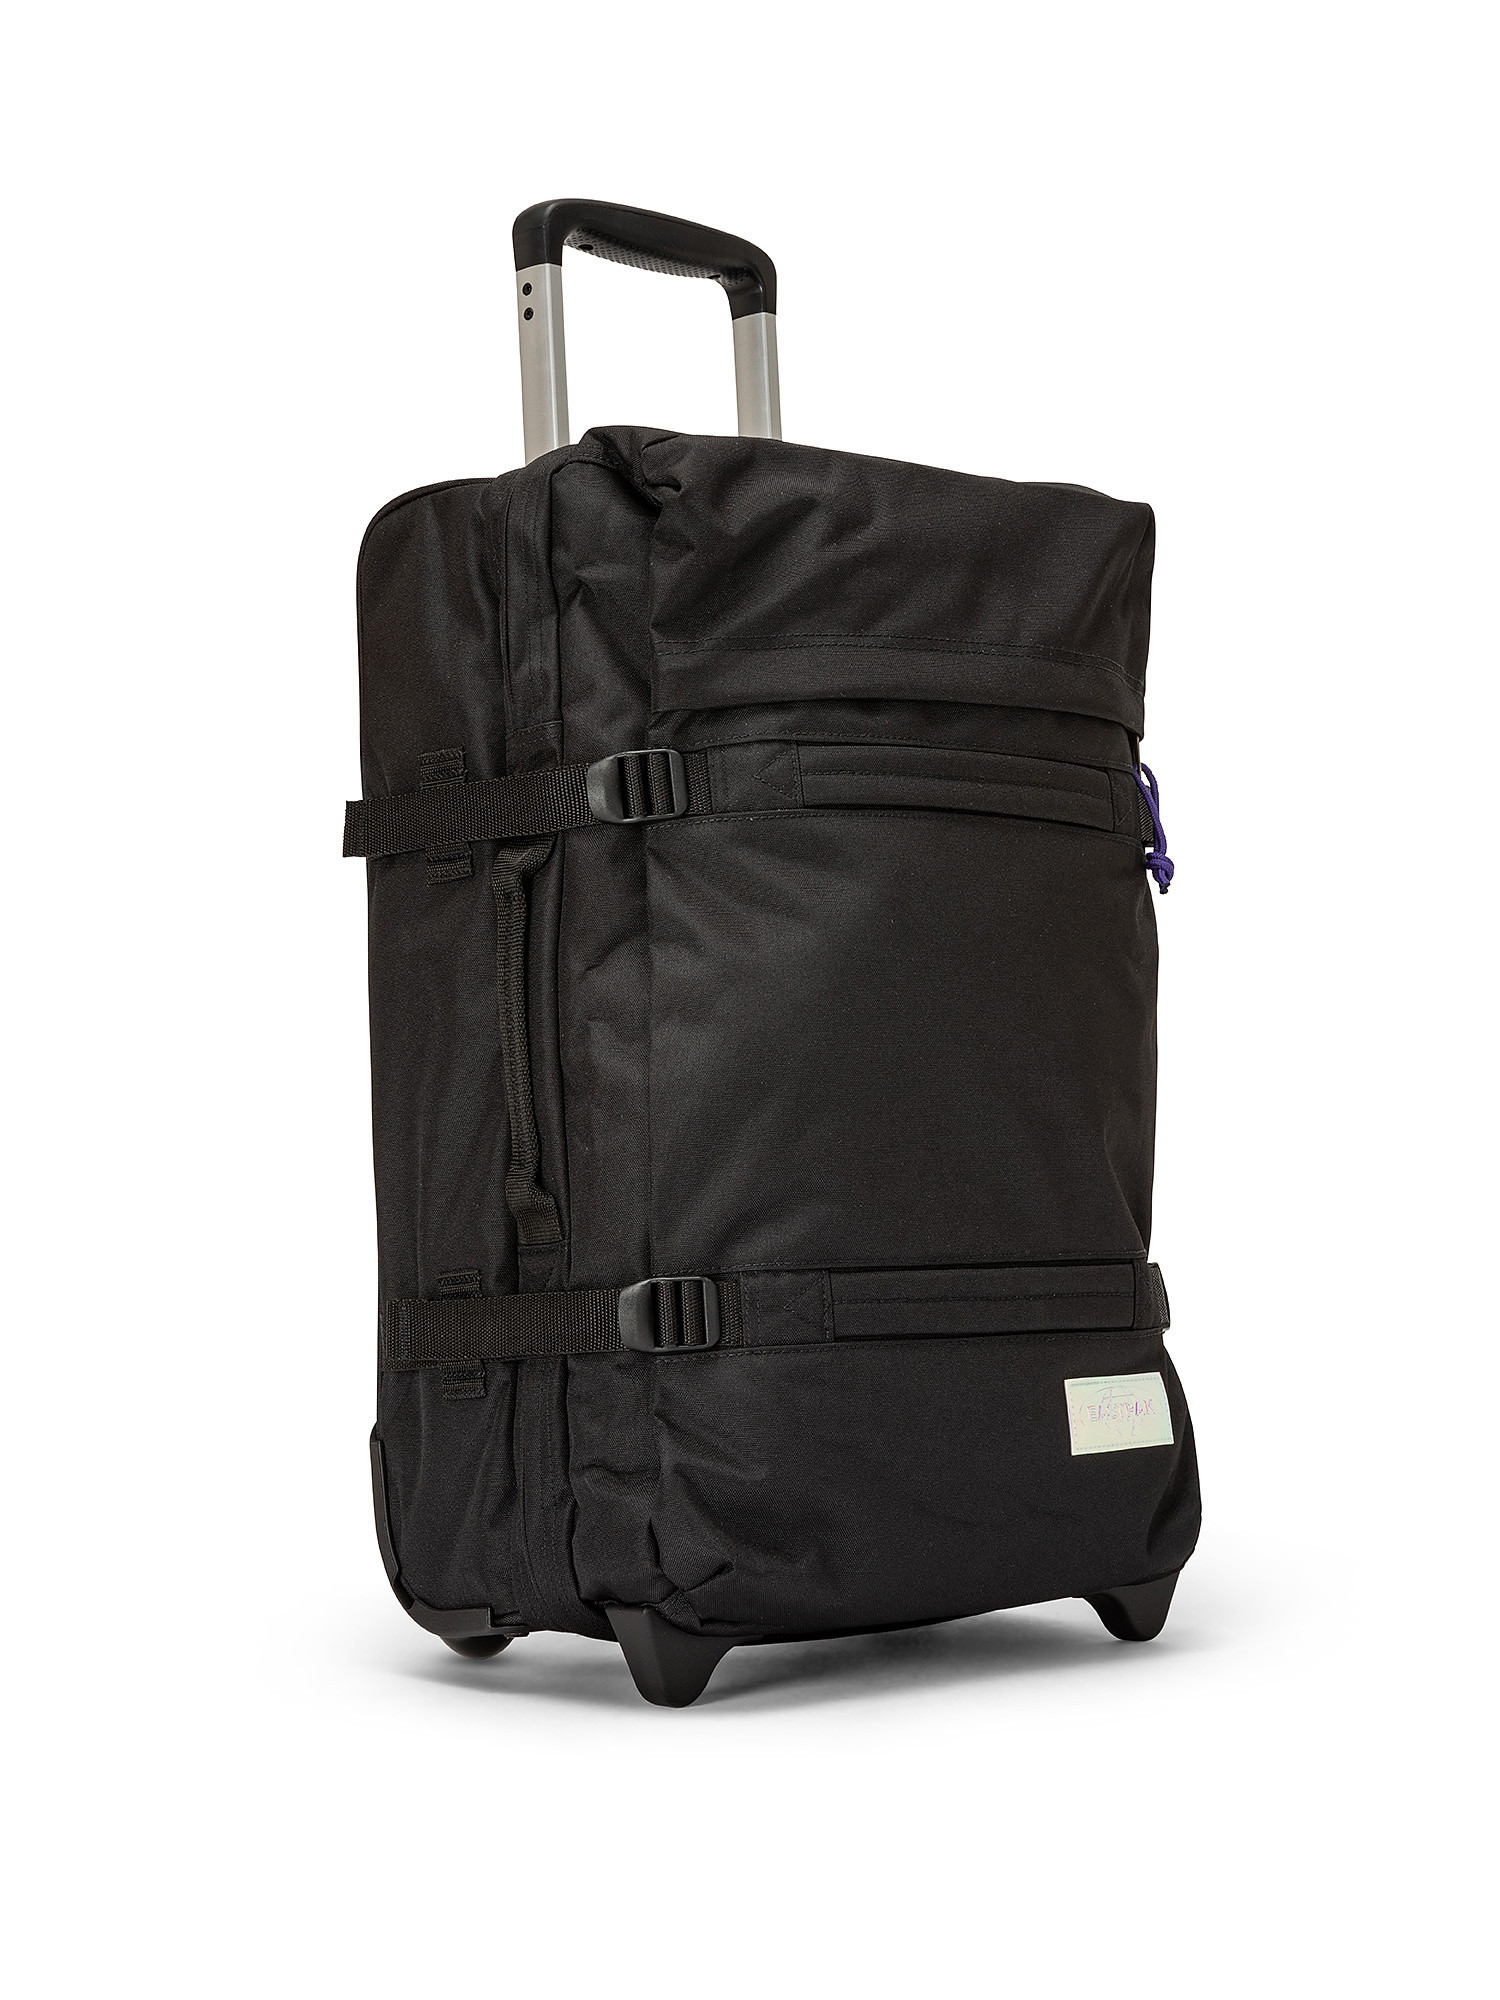 Backpack with pocket for laptop and tablet, Black, large image number 1